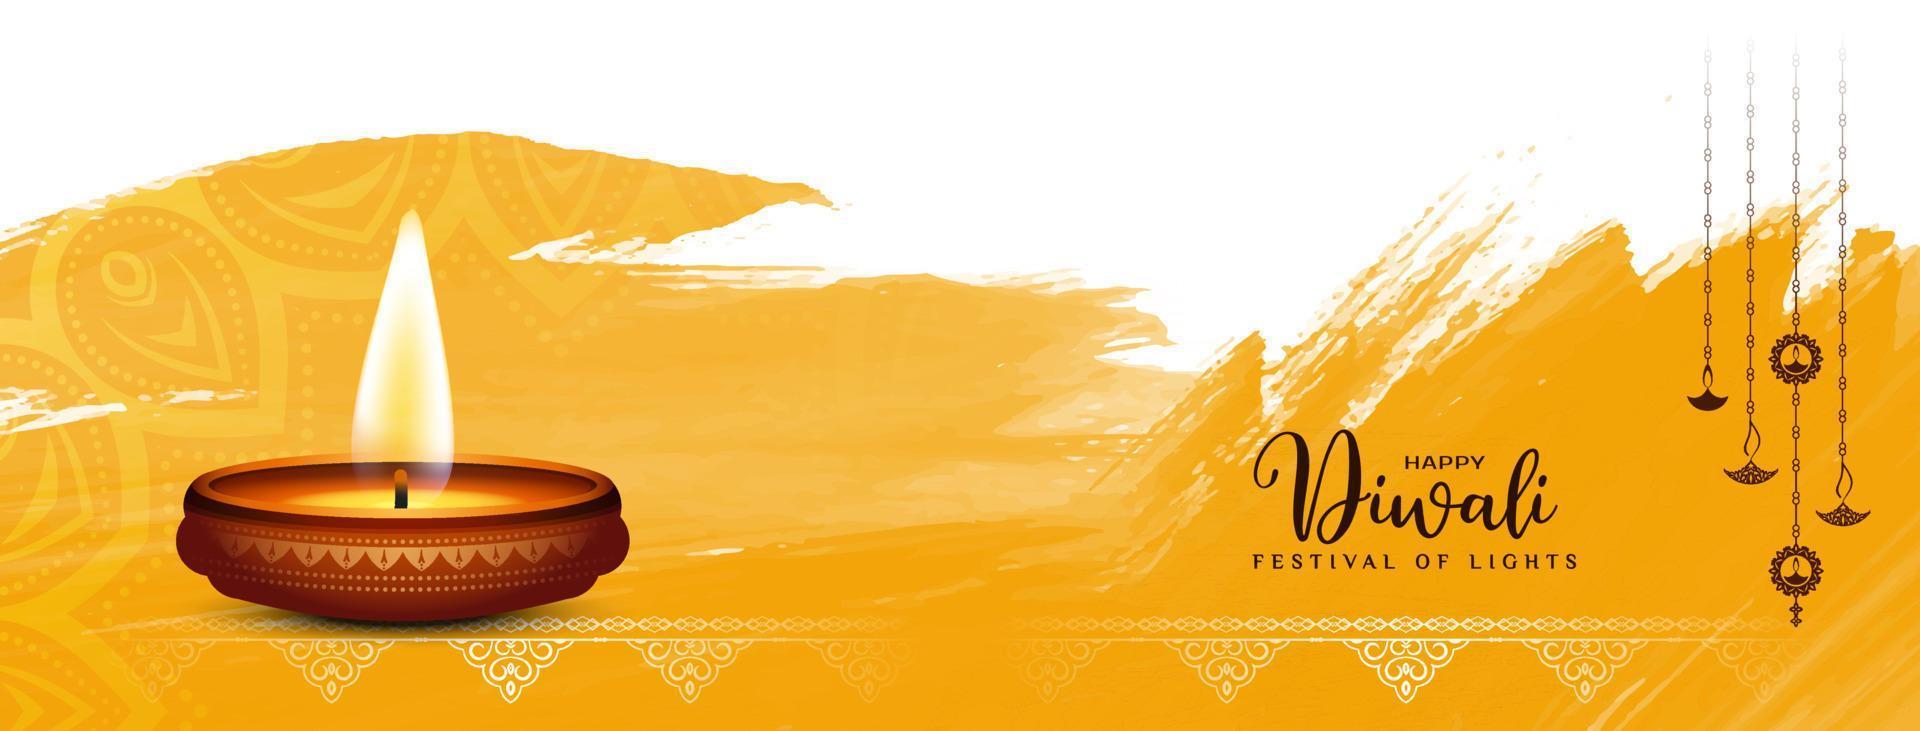 skön Lycklig diwali festival kulturell klassisk baner design vektor